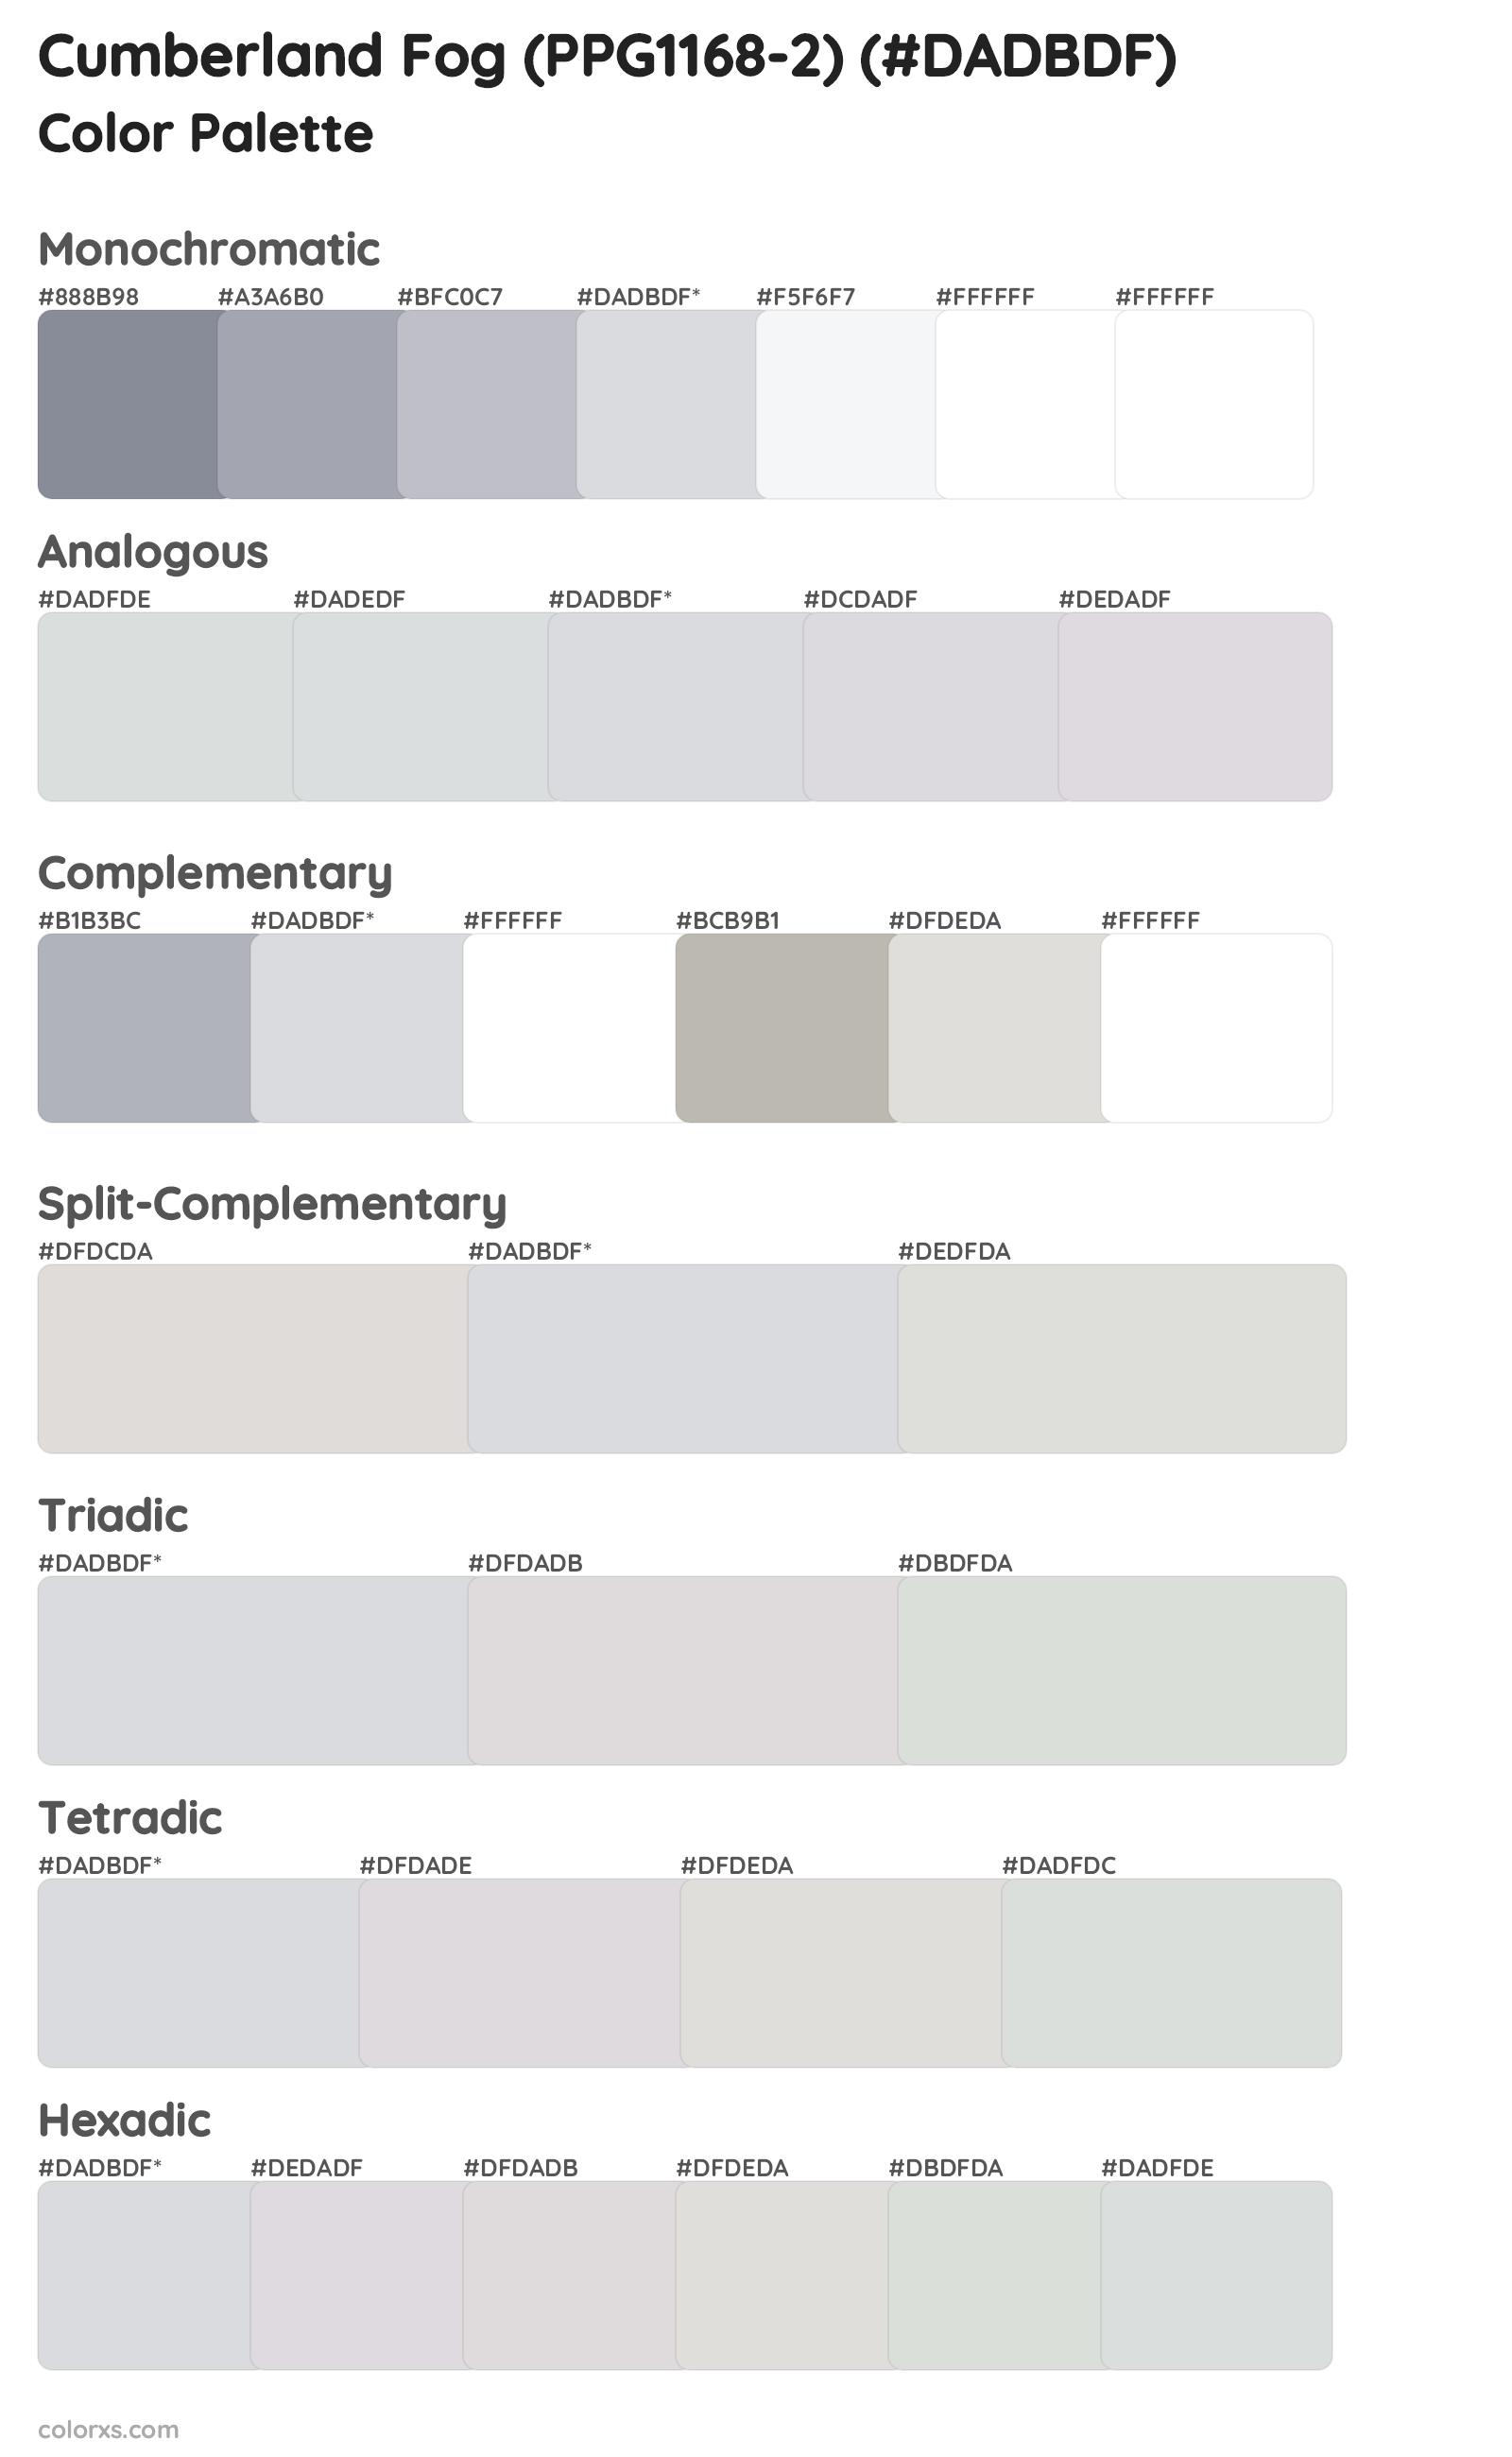 Cumberland Fog (PPG1168-2) Color Scheme Palettes